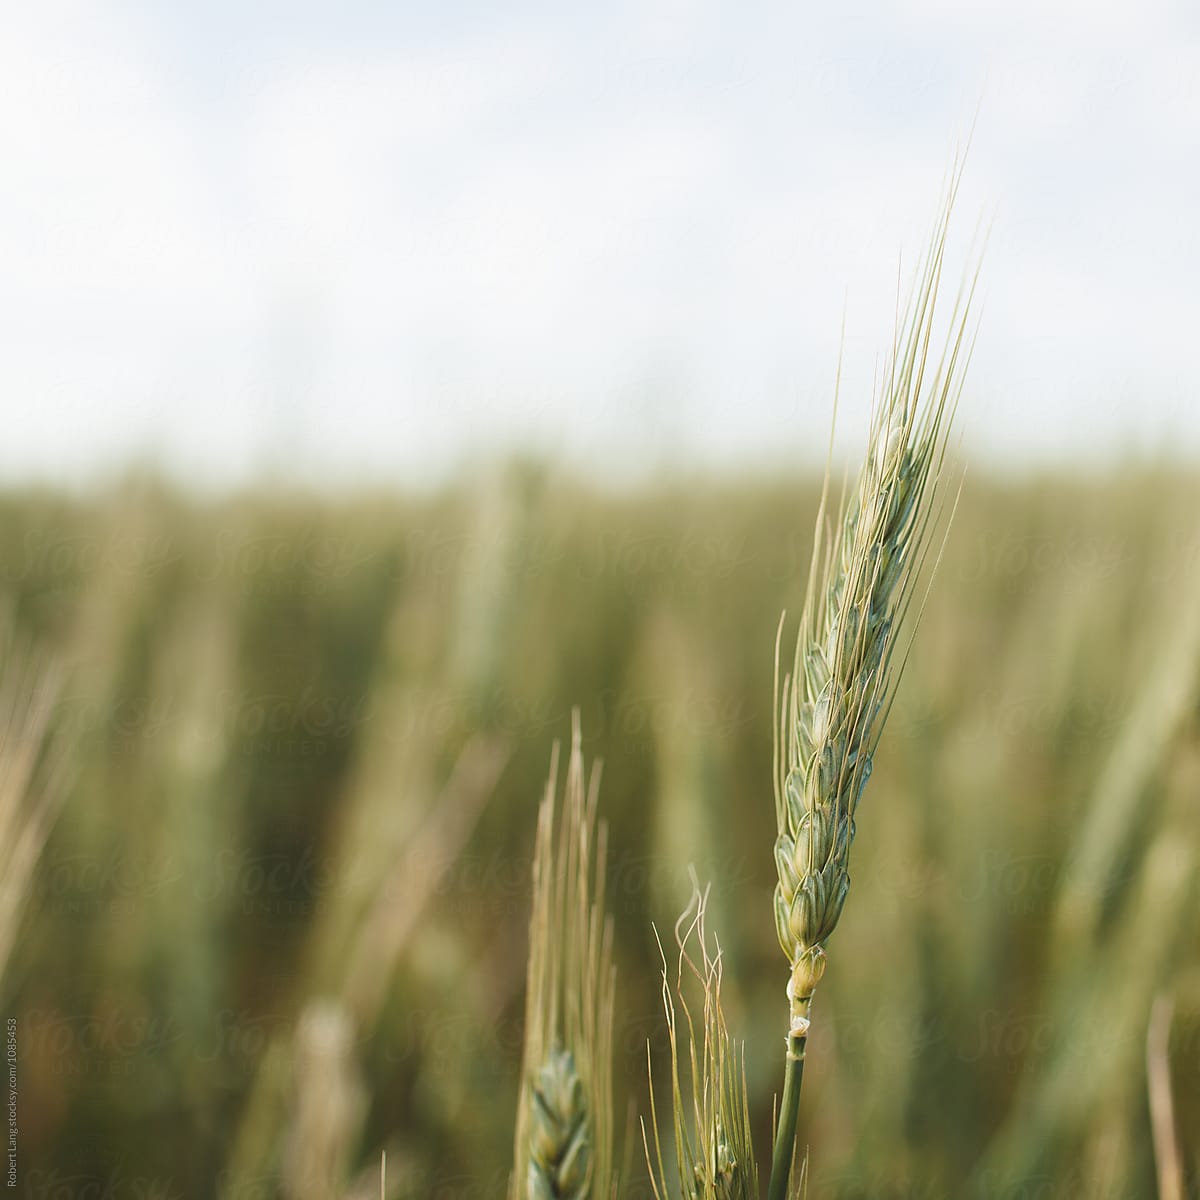 Stalk of green wheat